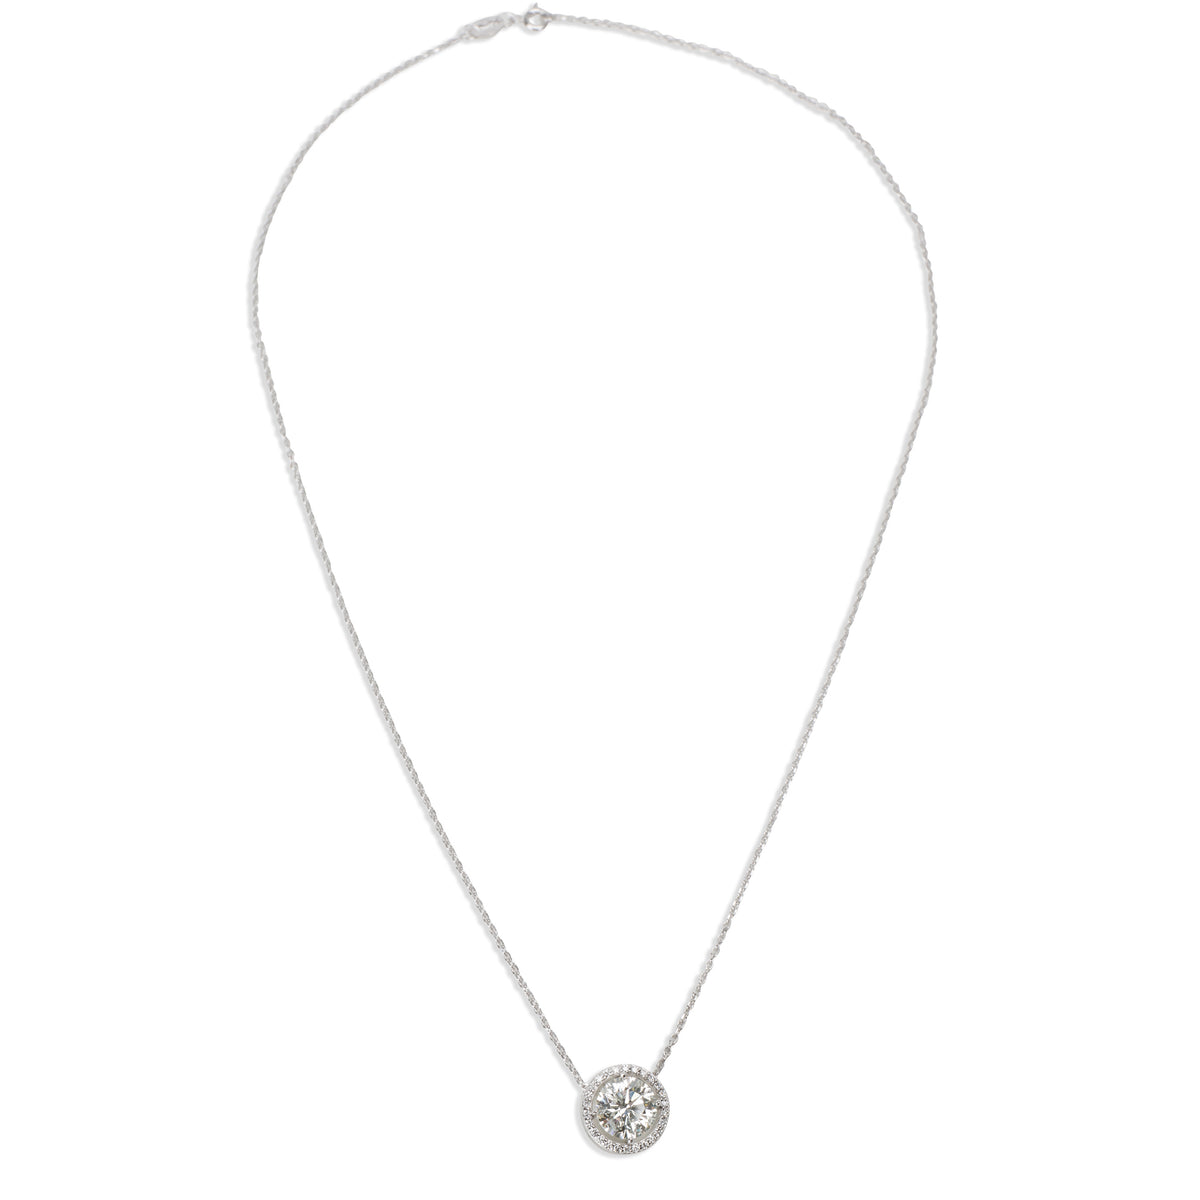 Diamond Halo Pendant Necklace in 14K White Gold (1.45 CTW)